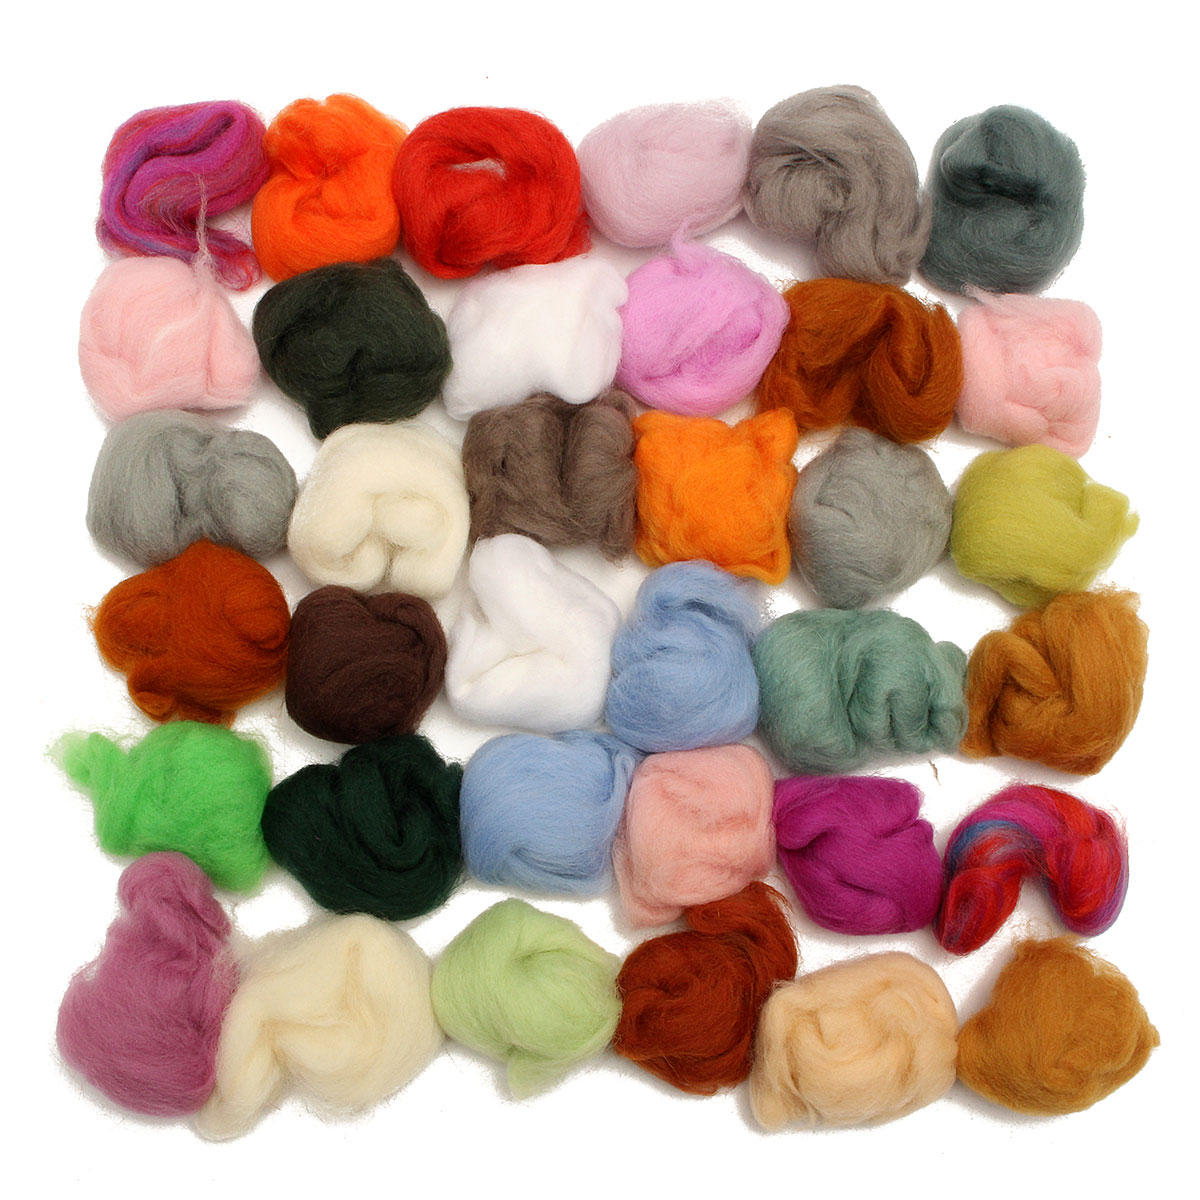 

36 Colors Retro Merino Wool Fibre Roving Sewing Kit for Needle Felting